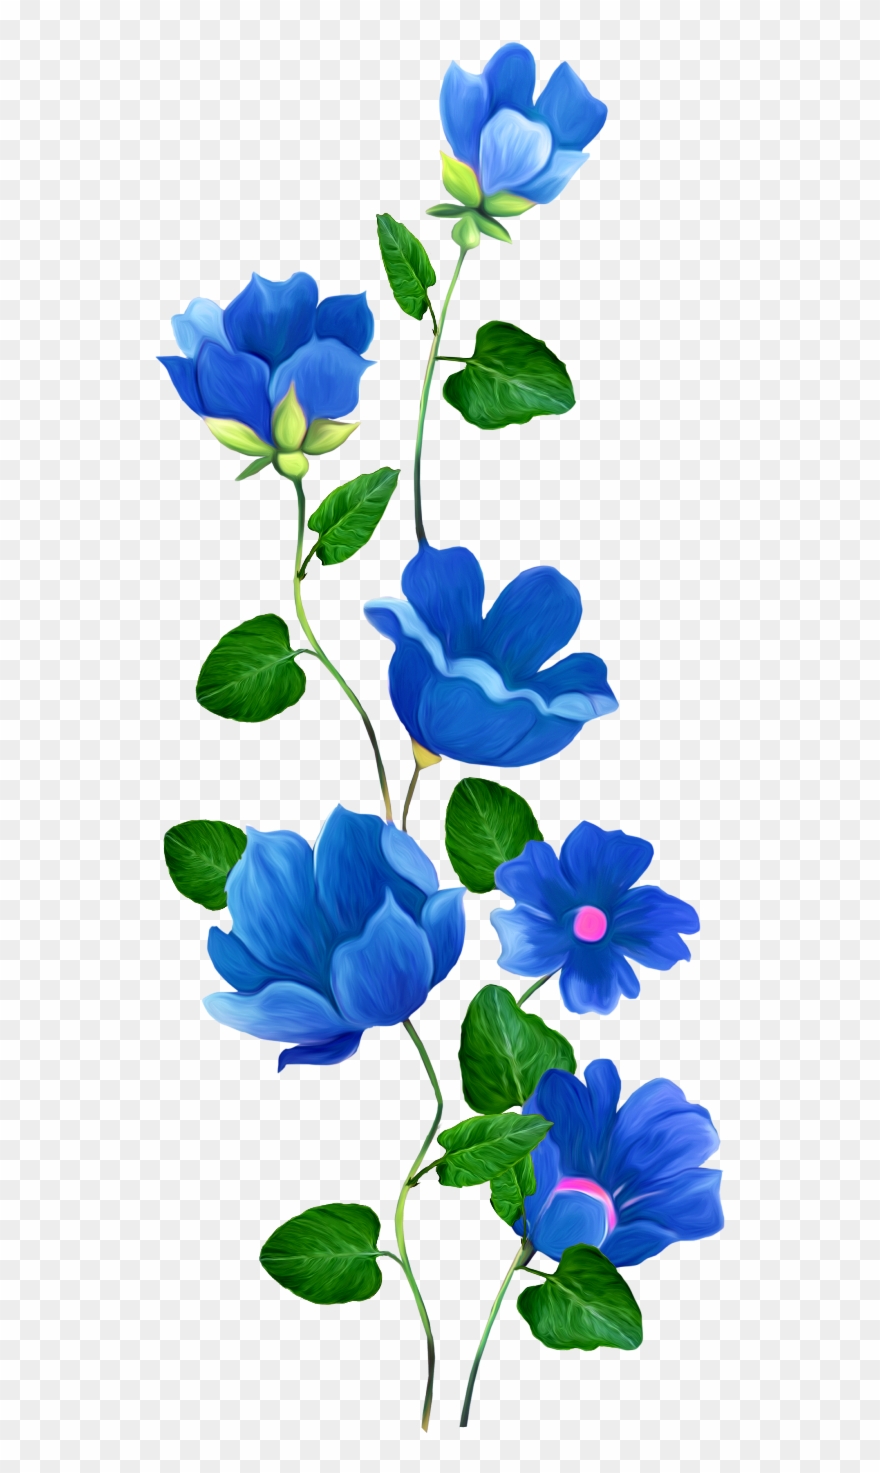 Flower rose blue.